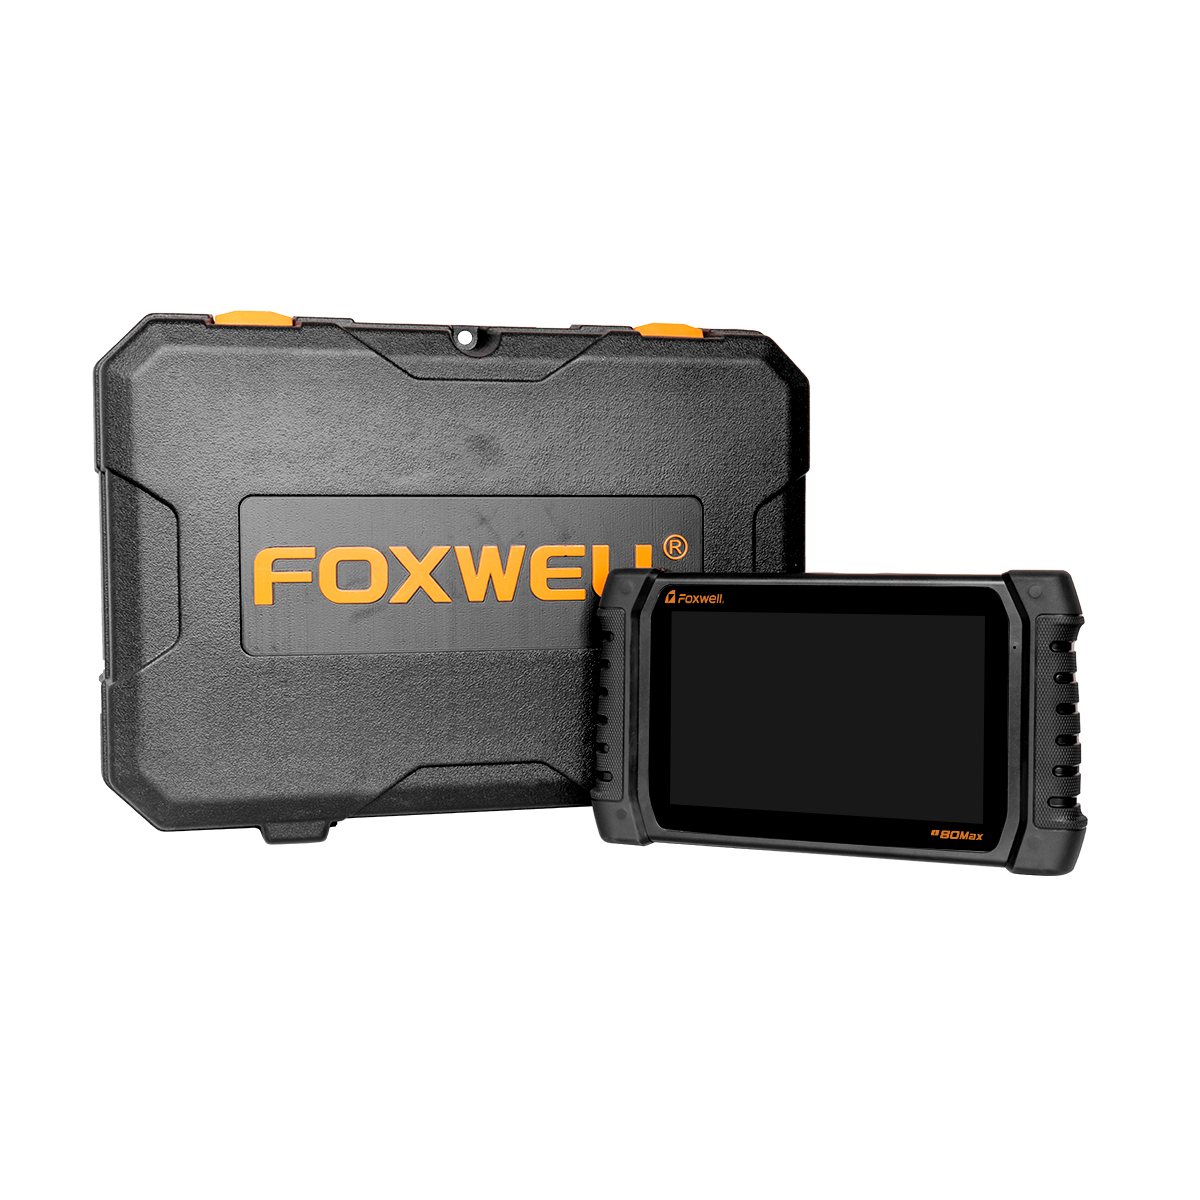 Foxwell I80Max 10.1'' Android Diagnostic System Universal Car Diagnostic Tool Full System Immo/Abs/Epb/Sas/Dpf/Oil Reset Auto Diagnostic Tools